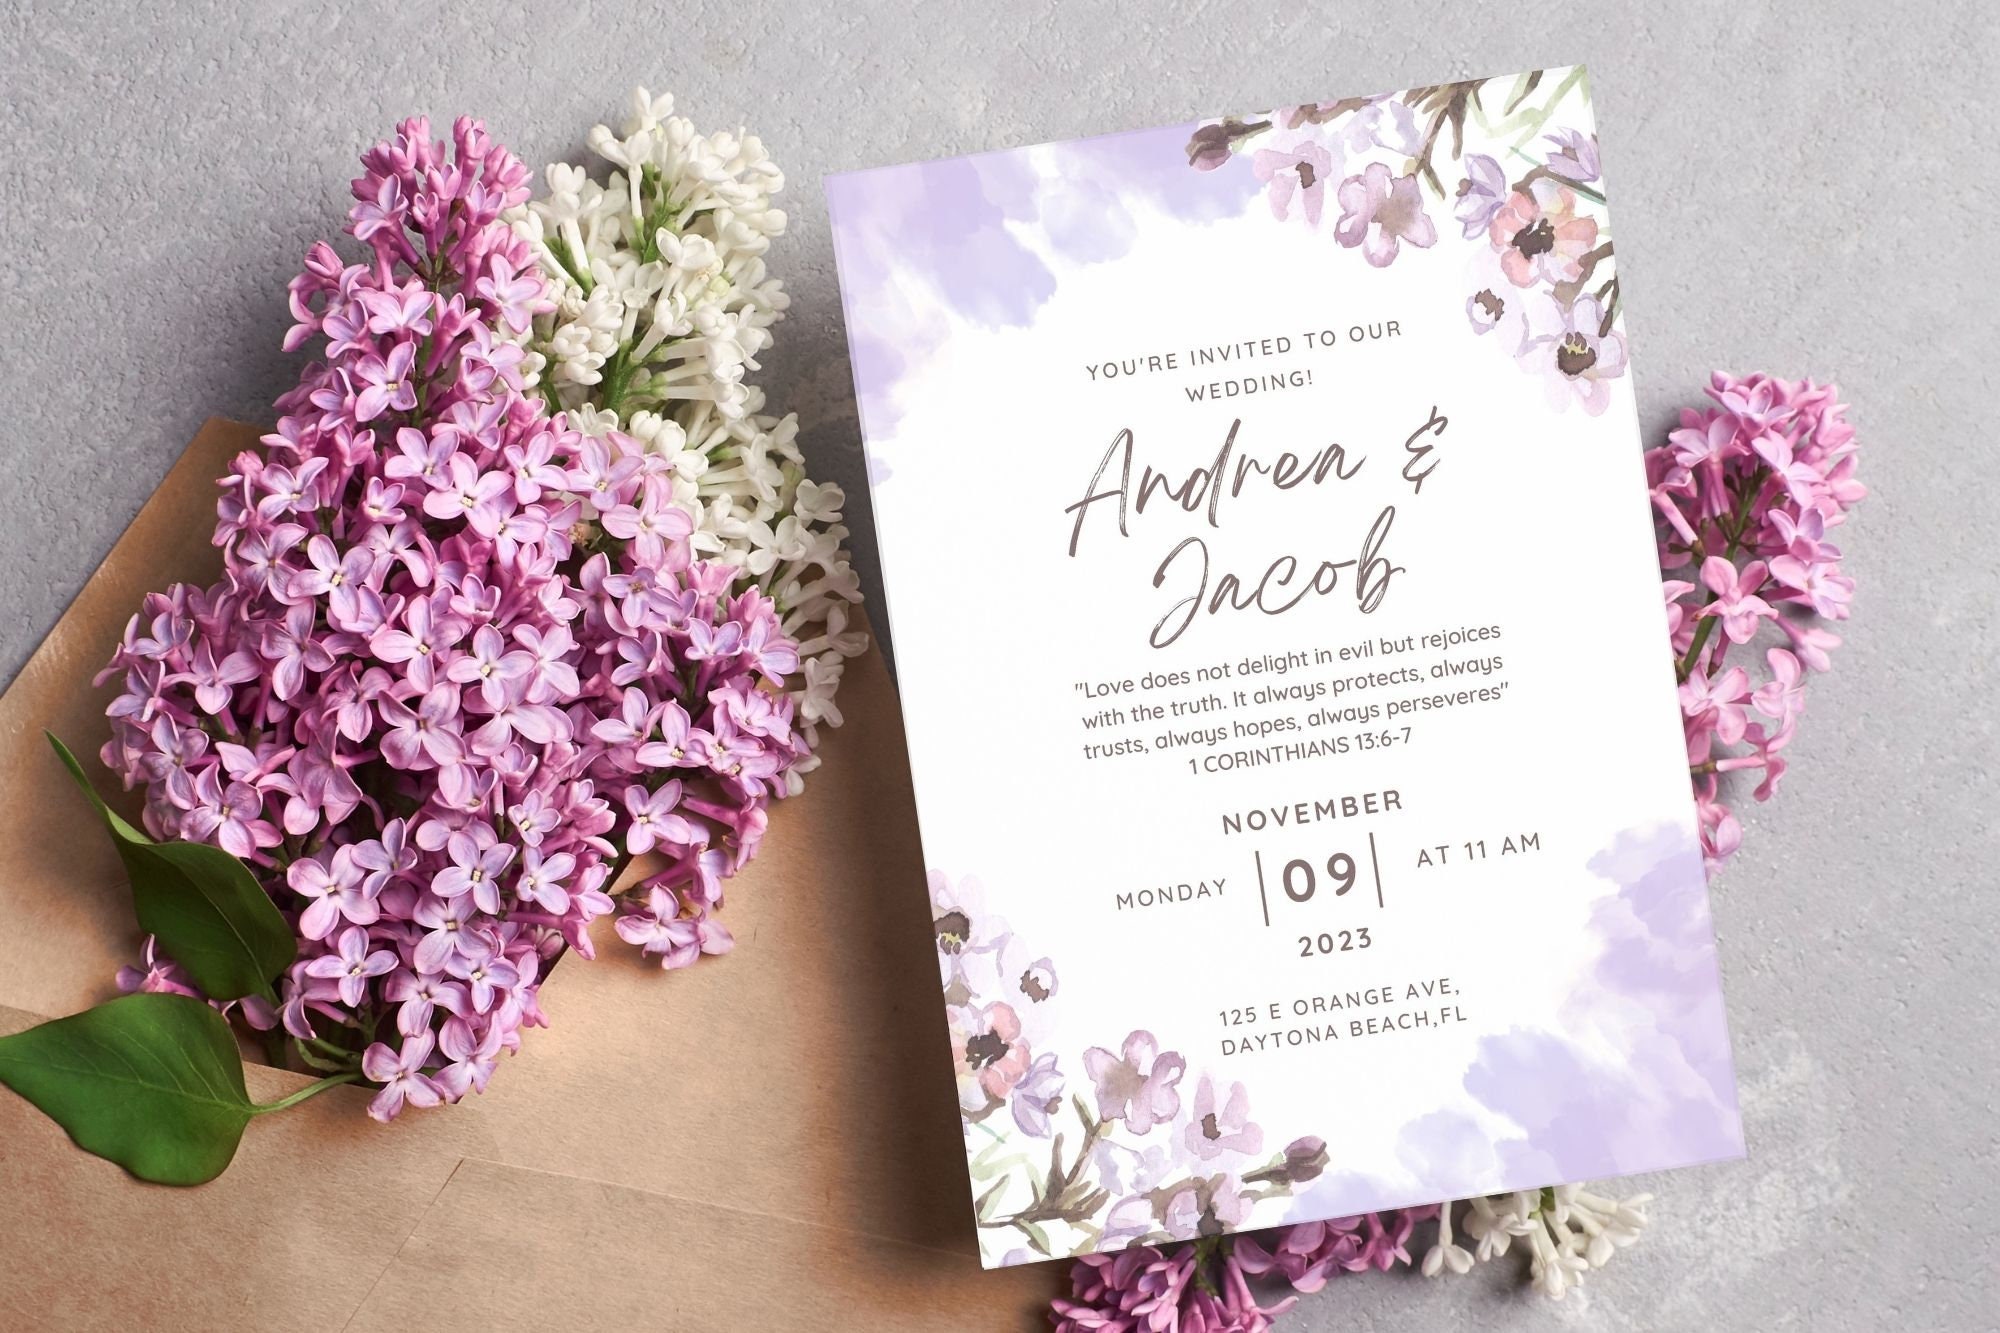 Mezclado ayer Incierto Christian Lilac Wedding Invitation ONLY Template Adobe and - Etsy